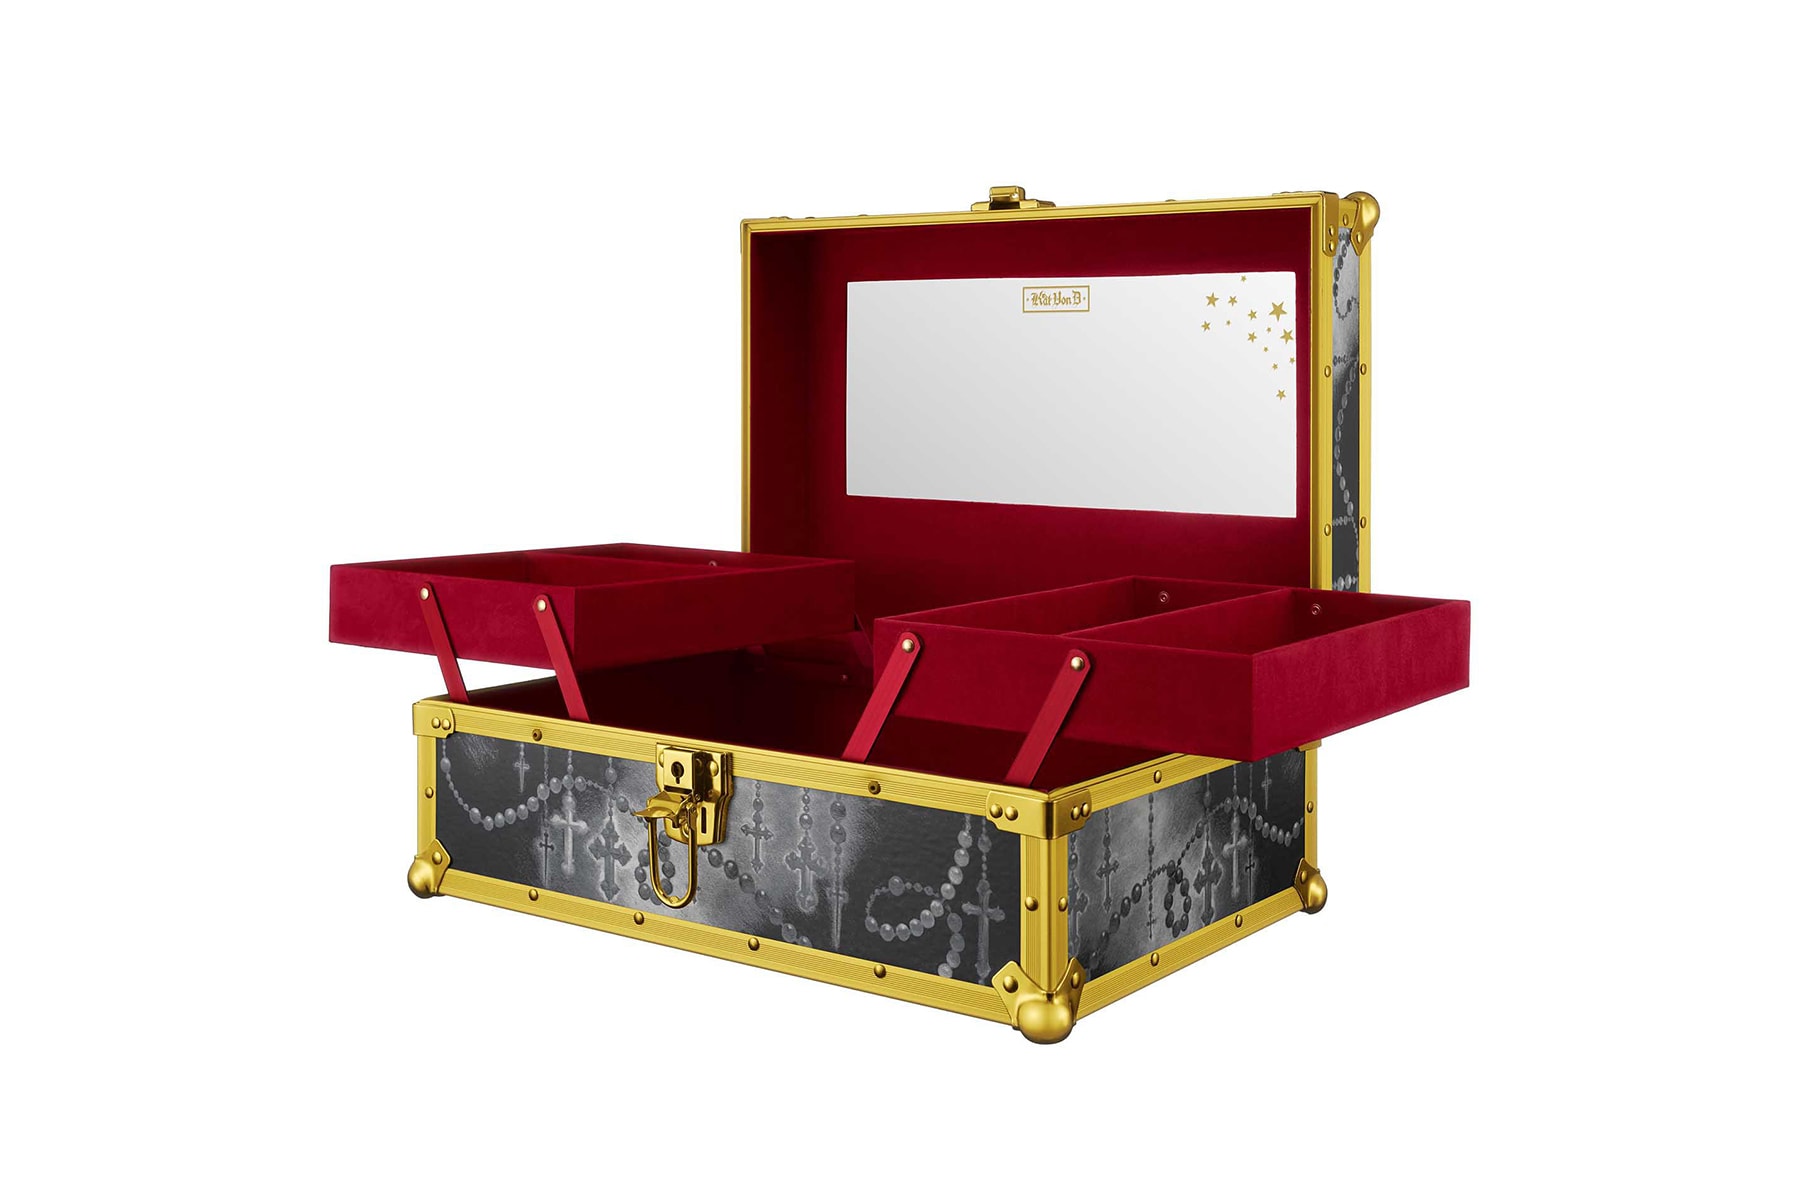 kat von d beauty 10 year anniversary makeup collection trunk red velvet gold black grey mirror